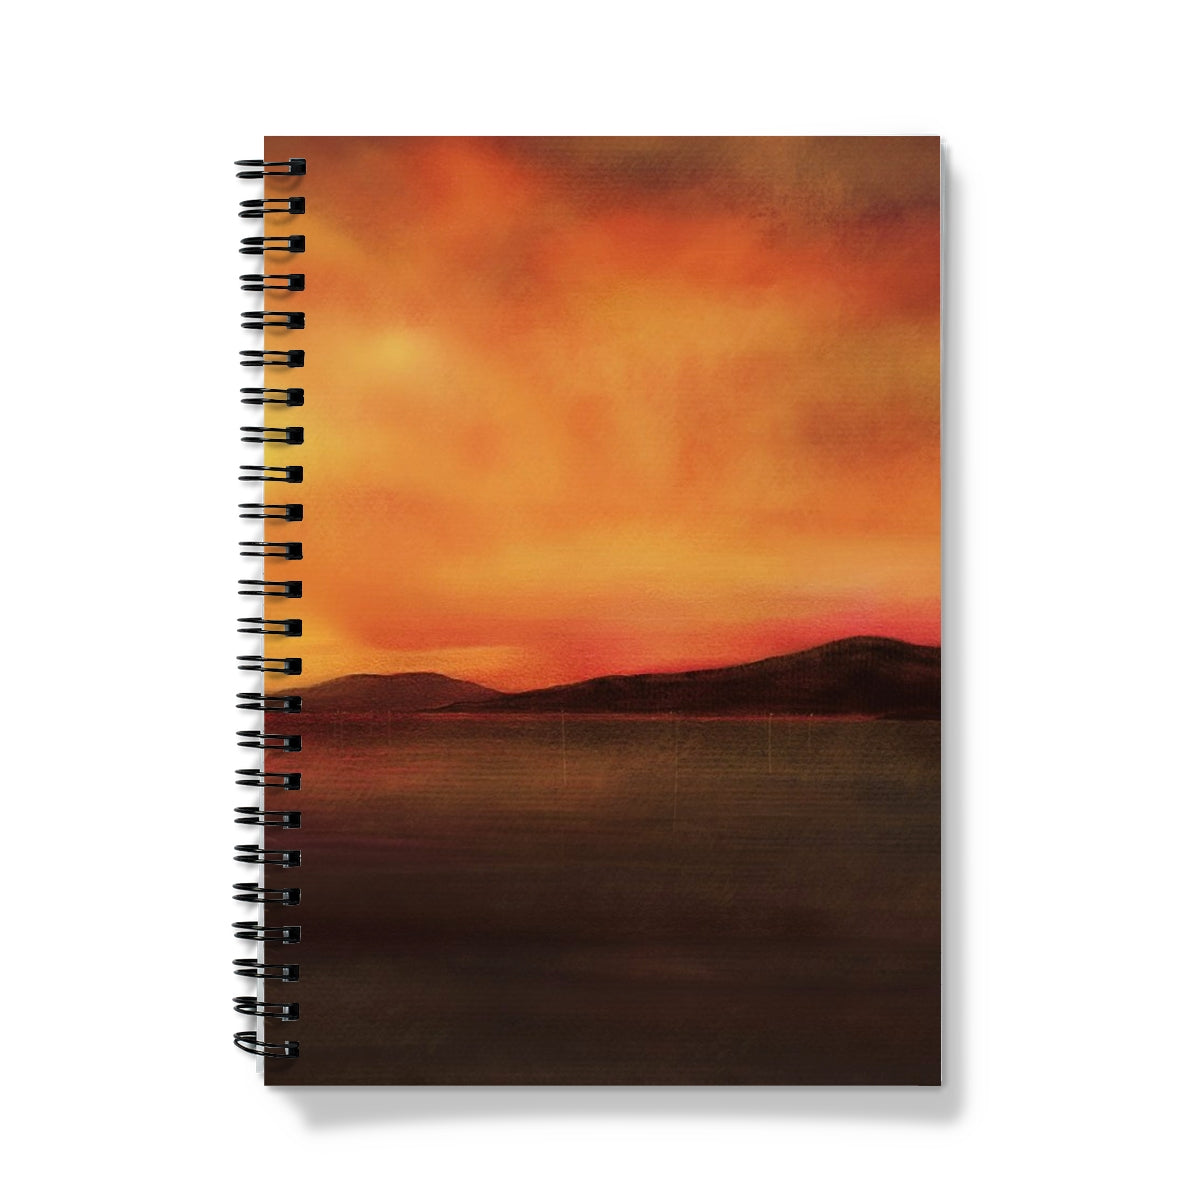 Harris Sunset Art Gifts Notebook-Journals & Notebooks-Hebridean Islands Art Gallery-A4-Graph-Paintings, Prints, Homeware, Art Gifts From Scotland By Scottish Artist Kevin Hunter